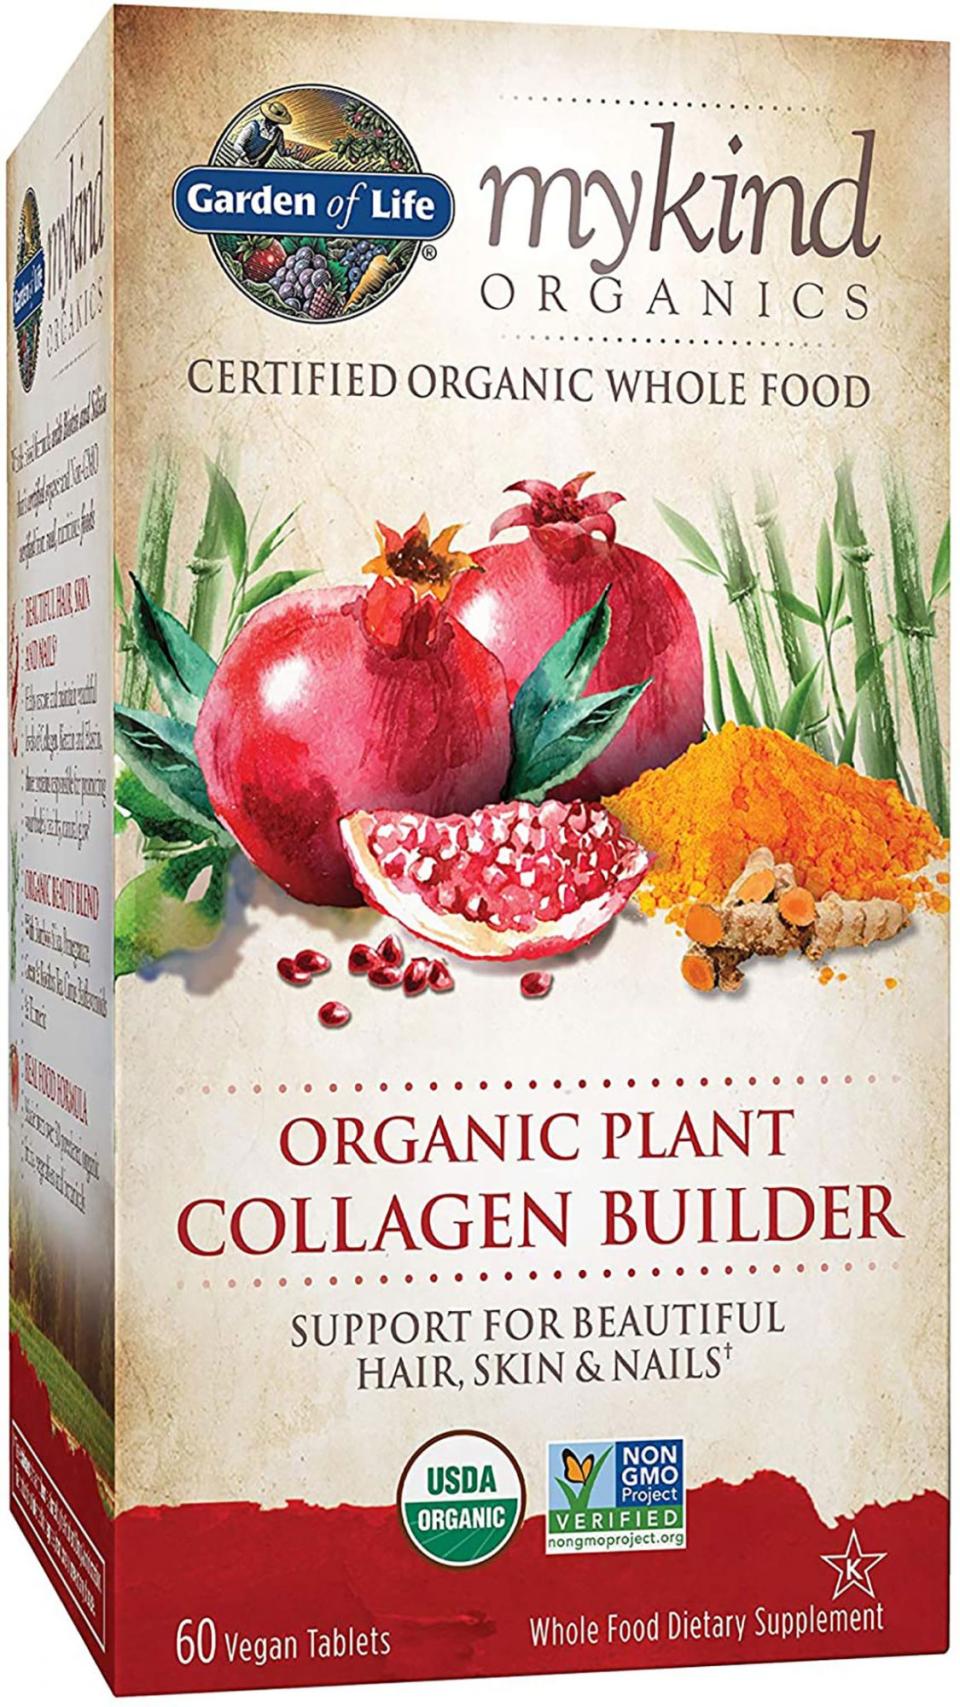 Best Organic Option: Garden of Life Vegan Collagen Builder